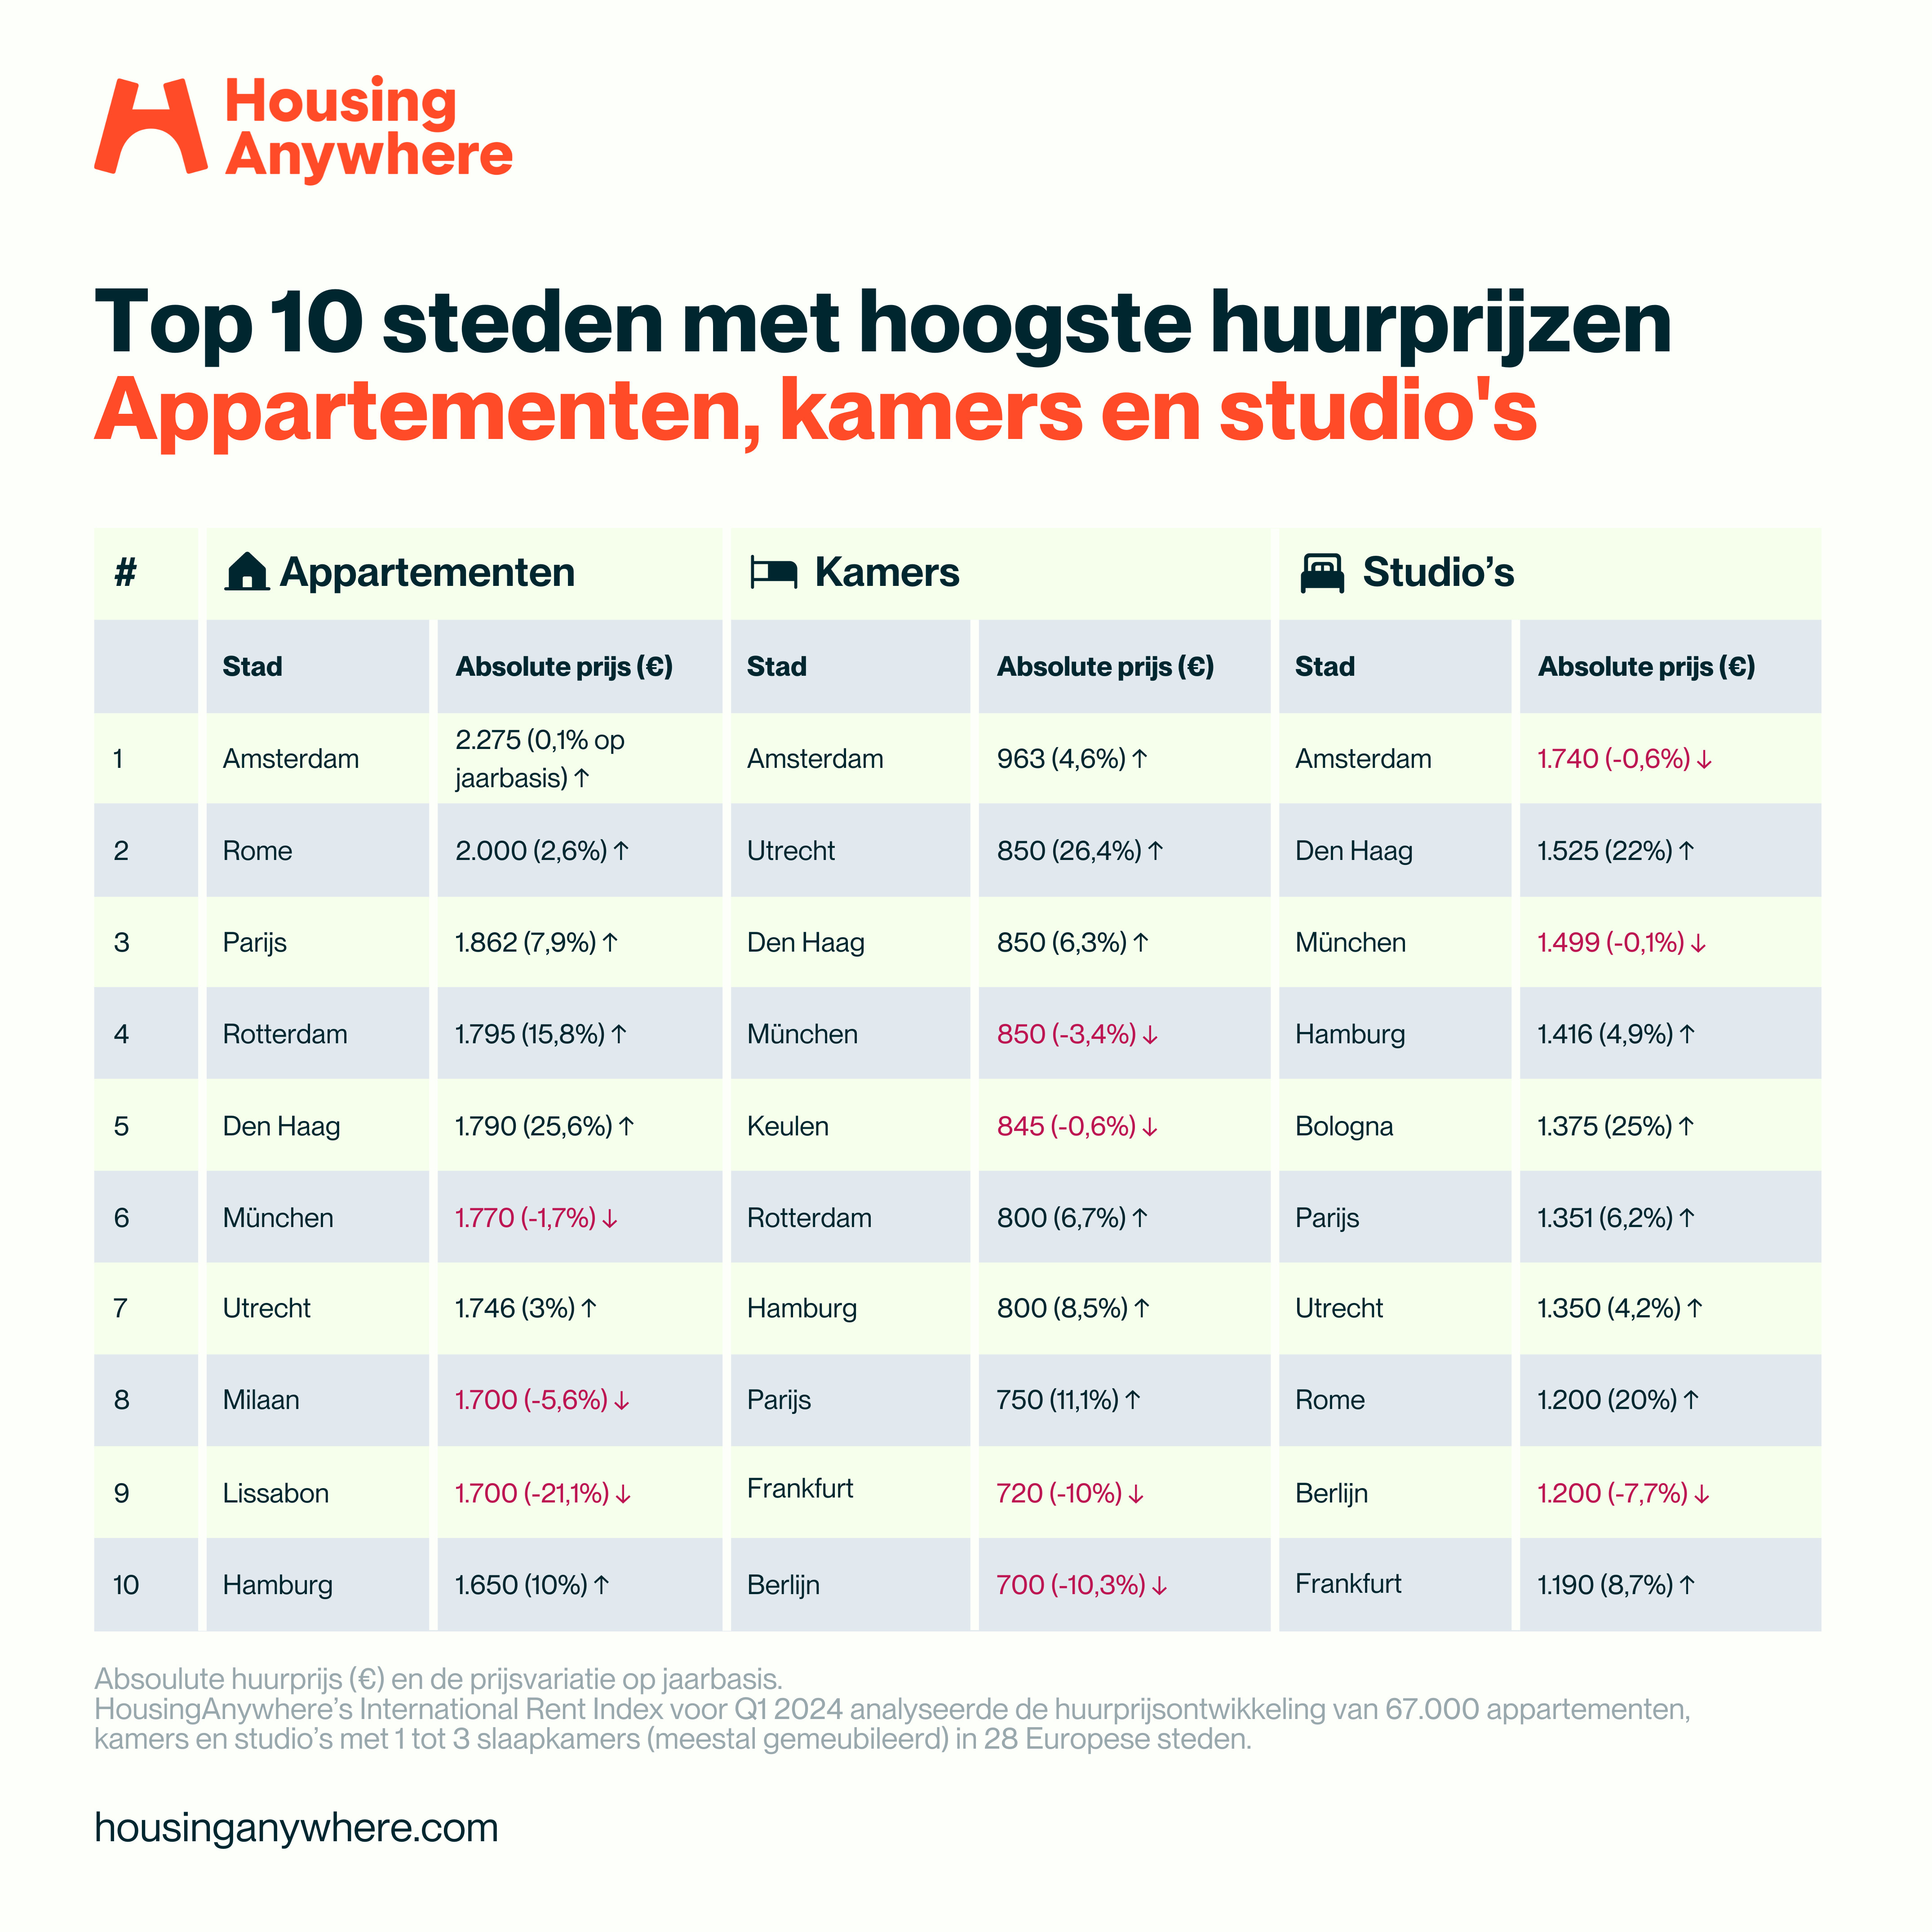 NL All Properties Rent Price (1)